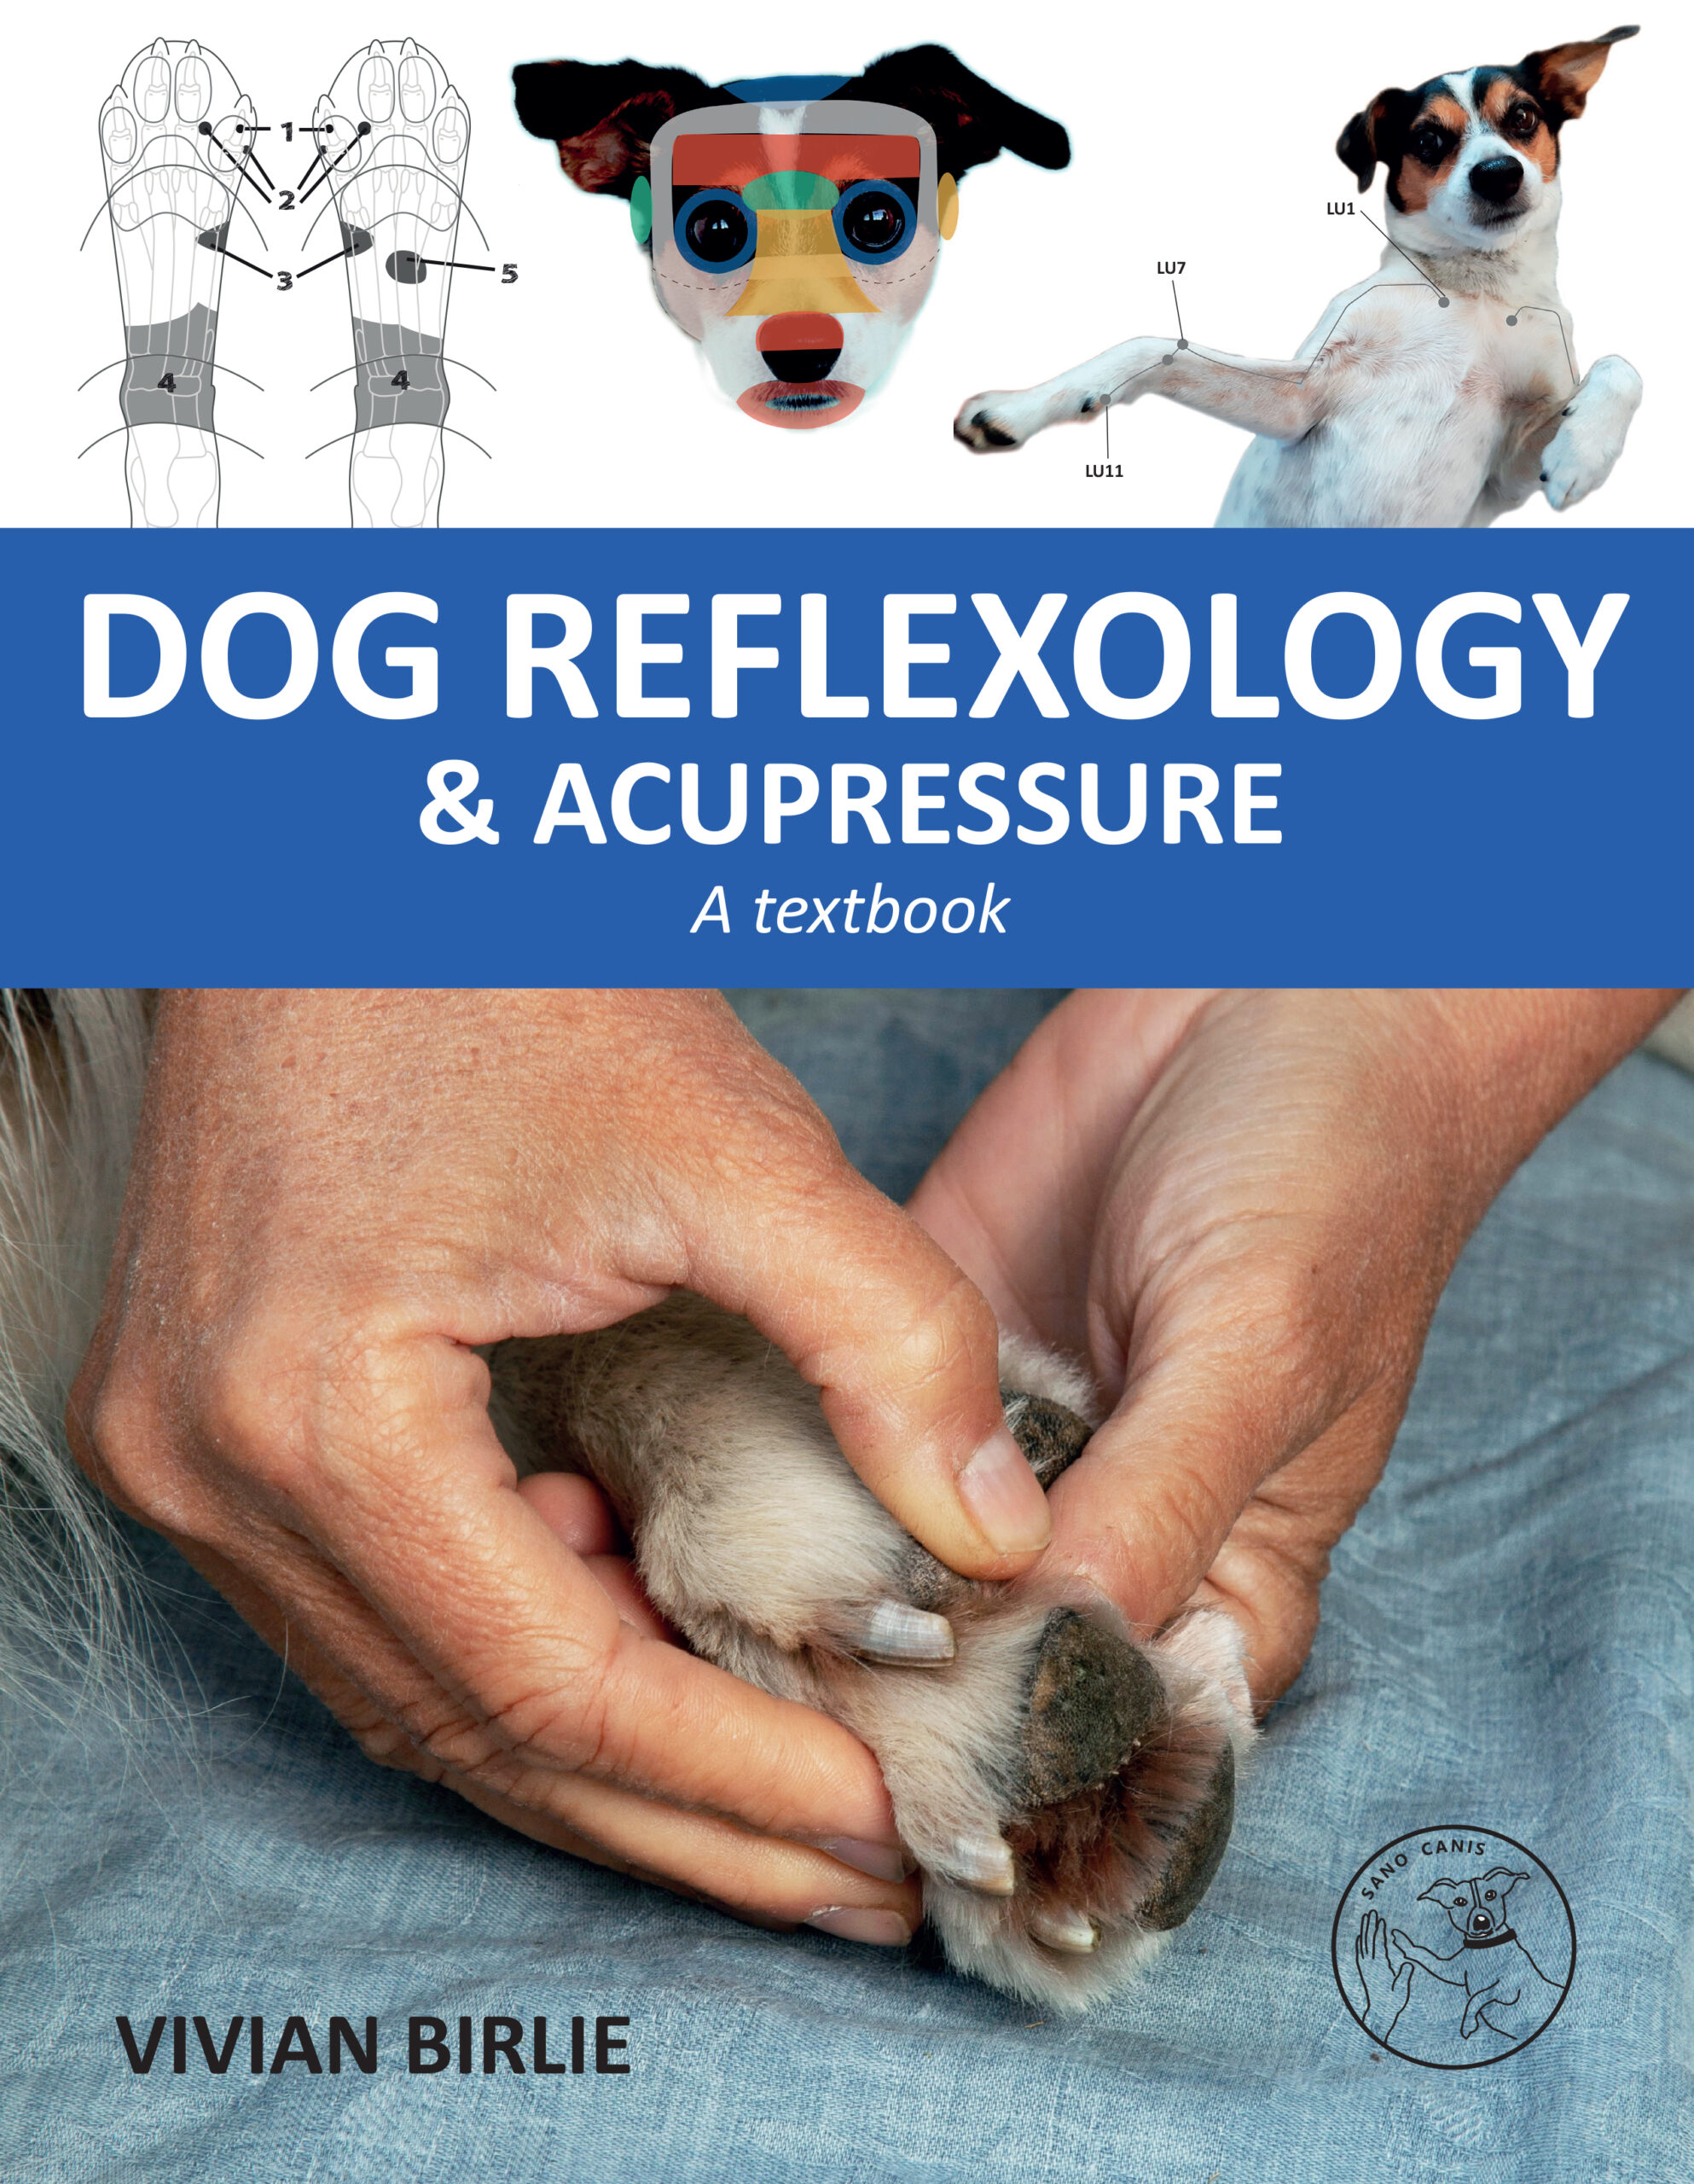 Dog reflexology and acupressure